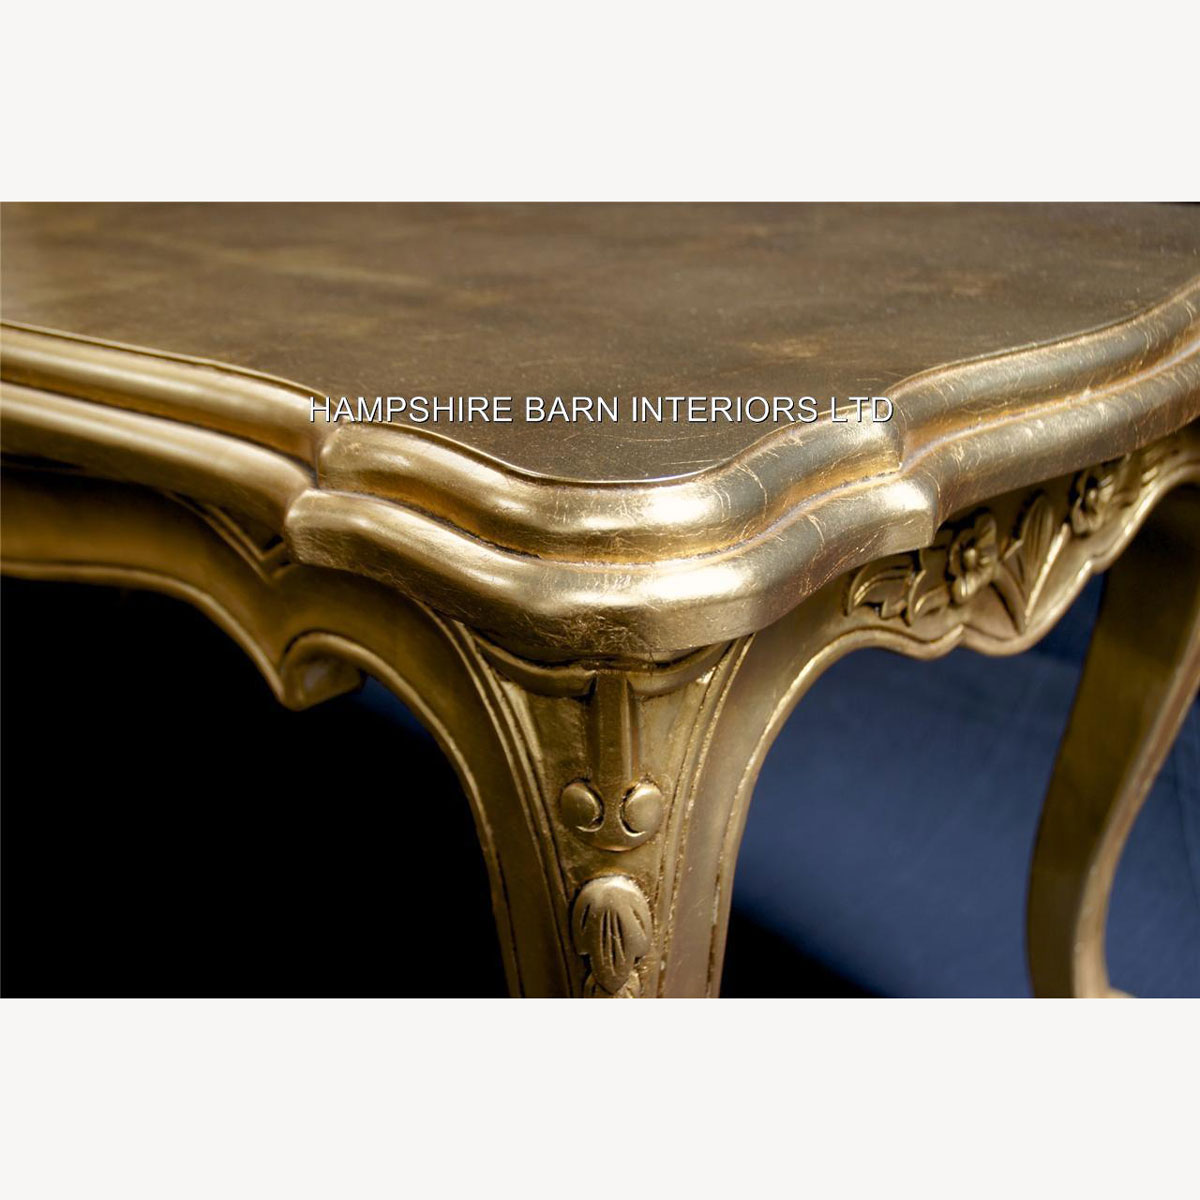 A Gold Leaf Ornate Chateau Style Side Lamp Table 3 - Hampshire Barn Interiors - A Gold Leaf Ornate Chateau Style Side / Lamp Table -